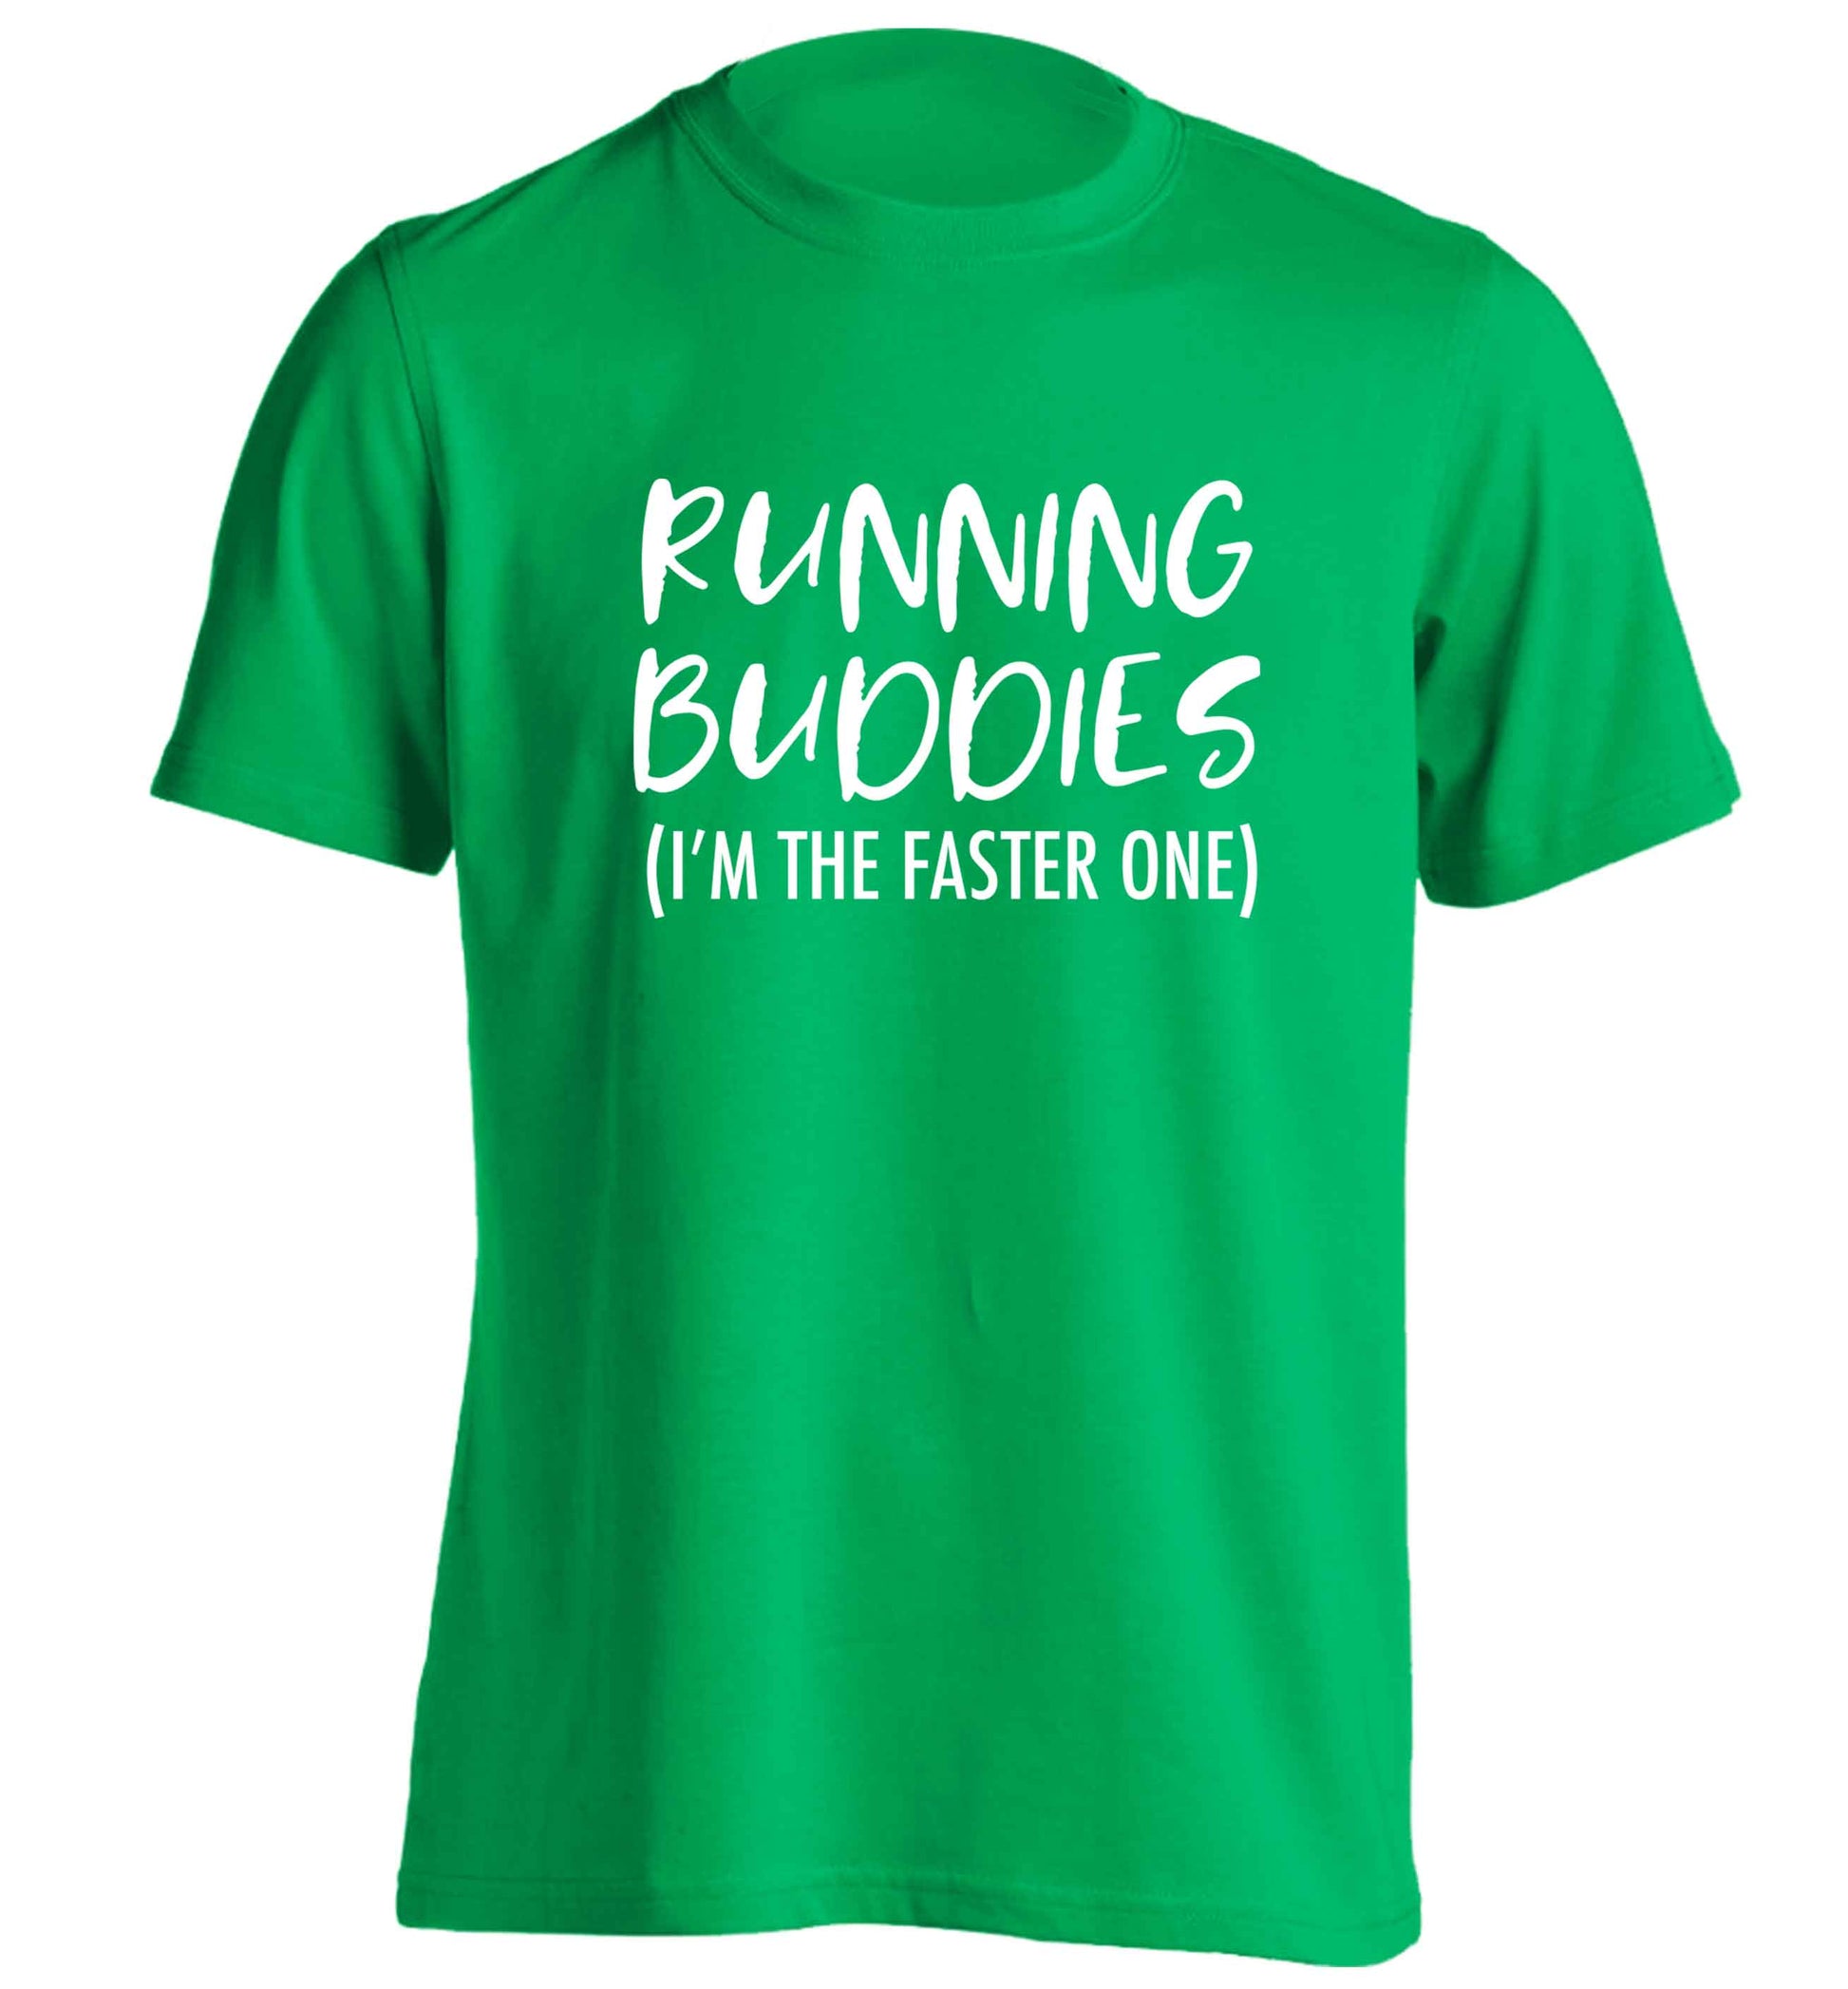 Running buddies (I'm the faster one) adults unisex green Tshirt 2XL